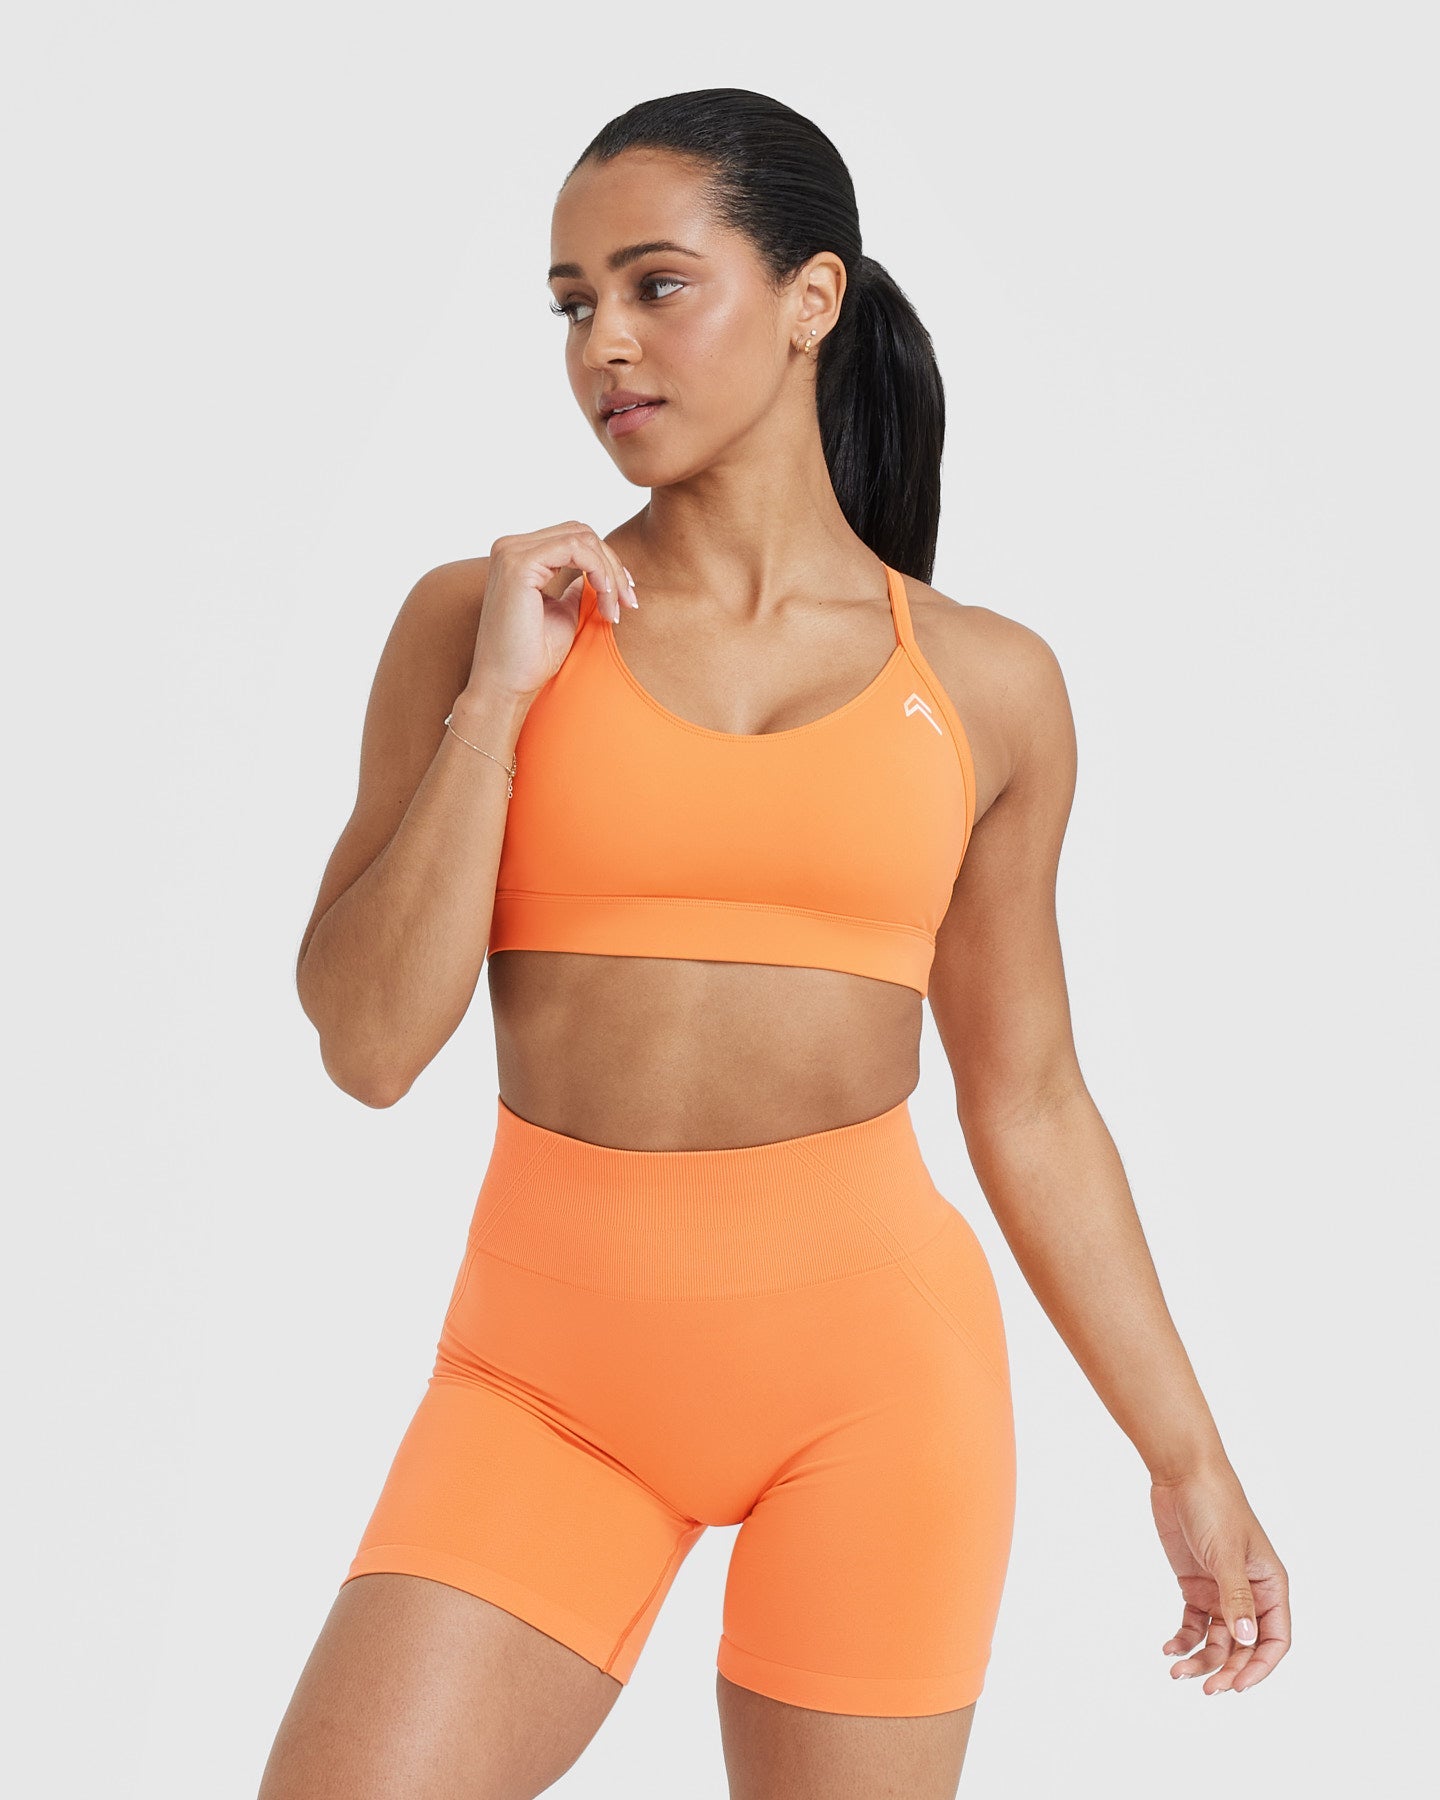 Reebok Ladies Ultima Orange Seamless Sports Bra, Size Medium